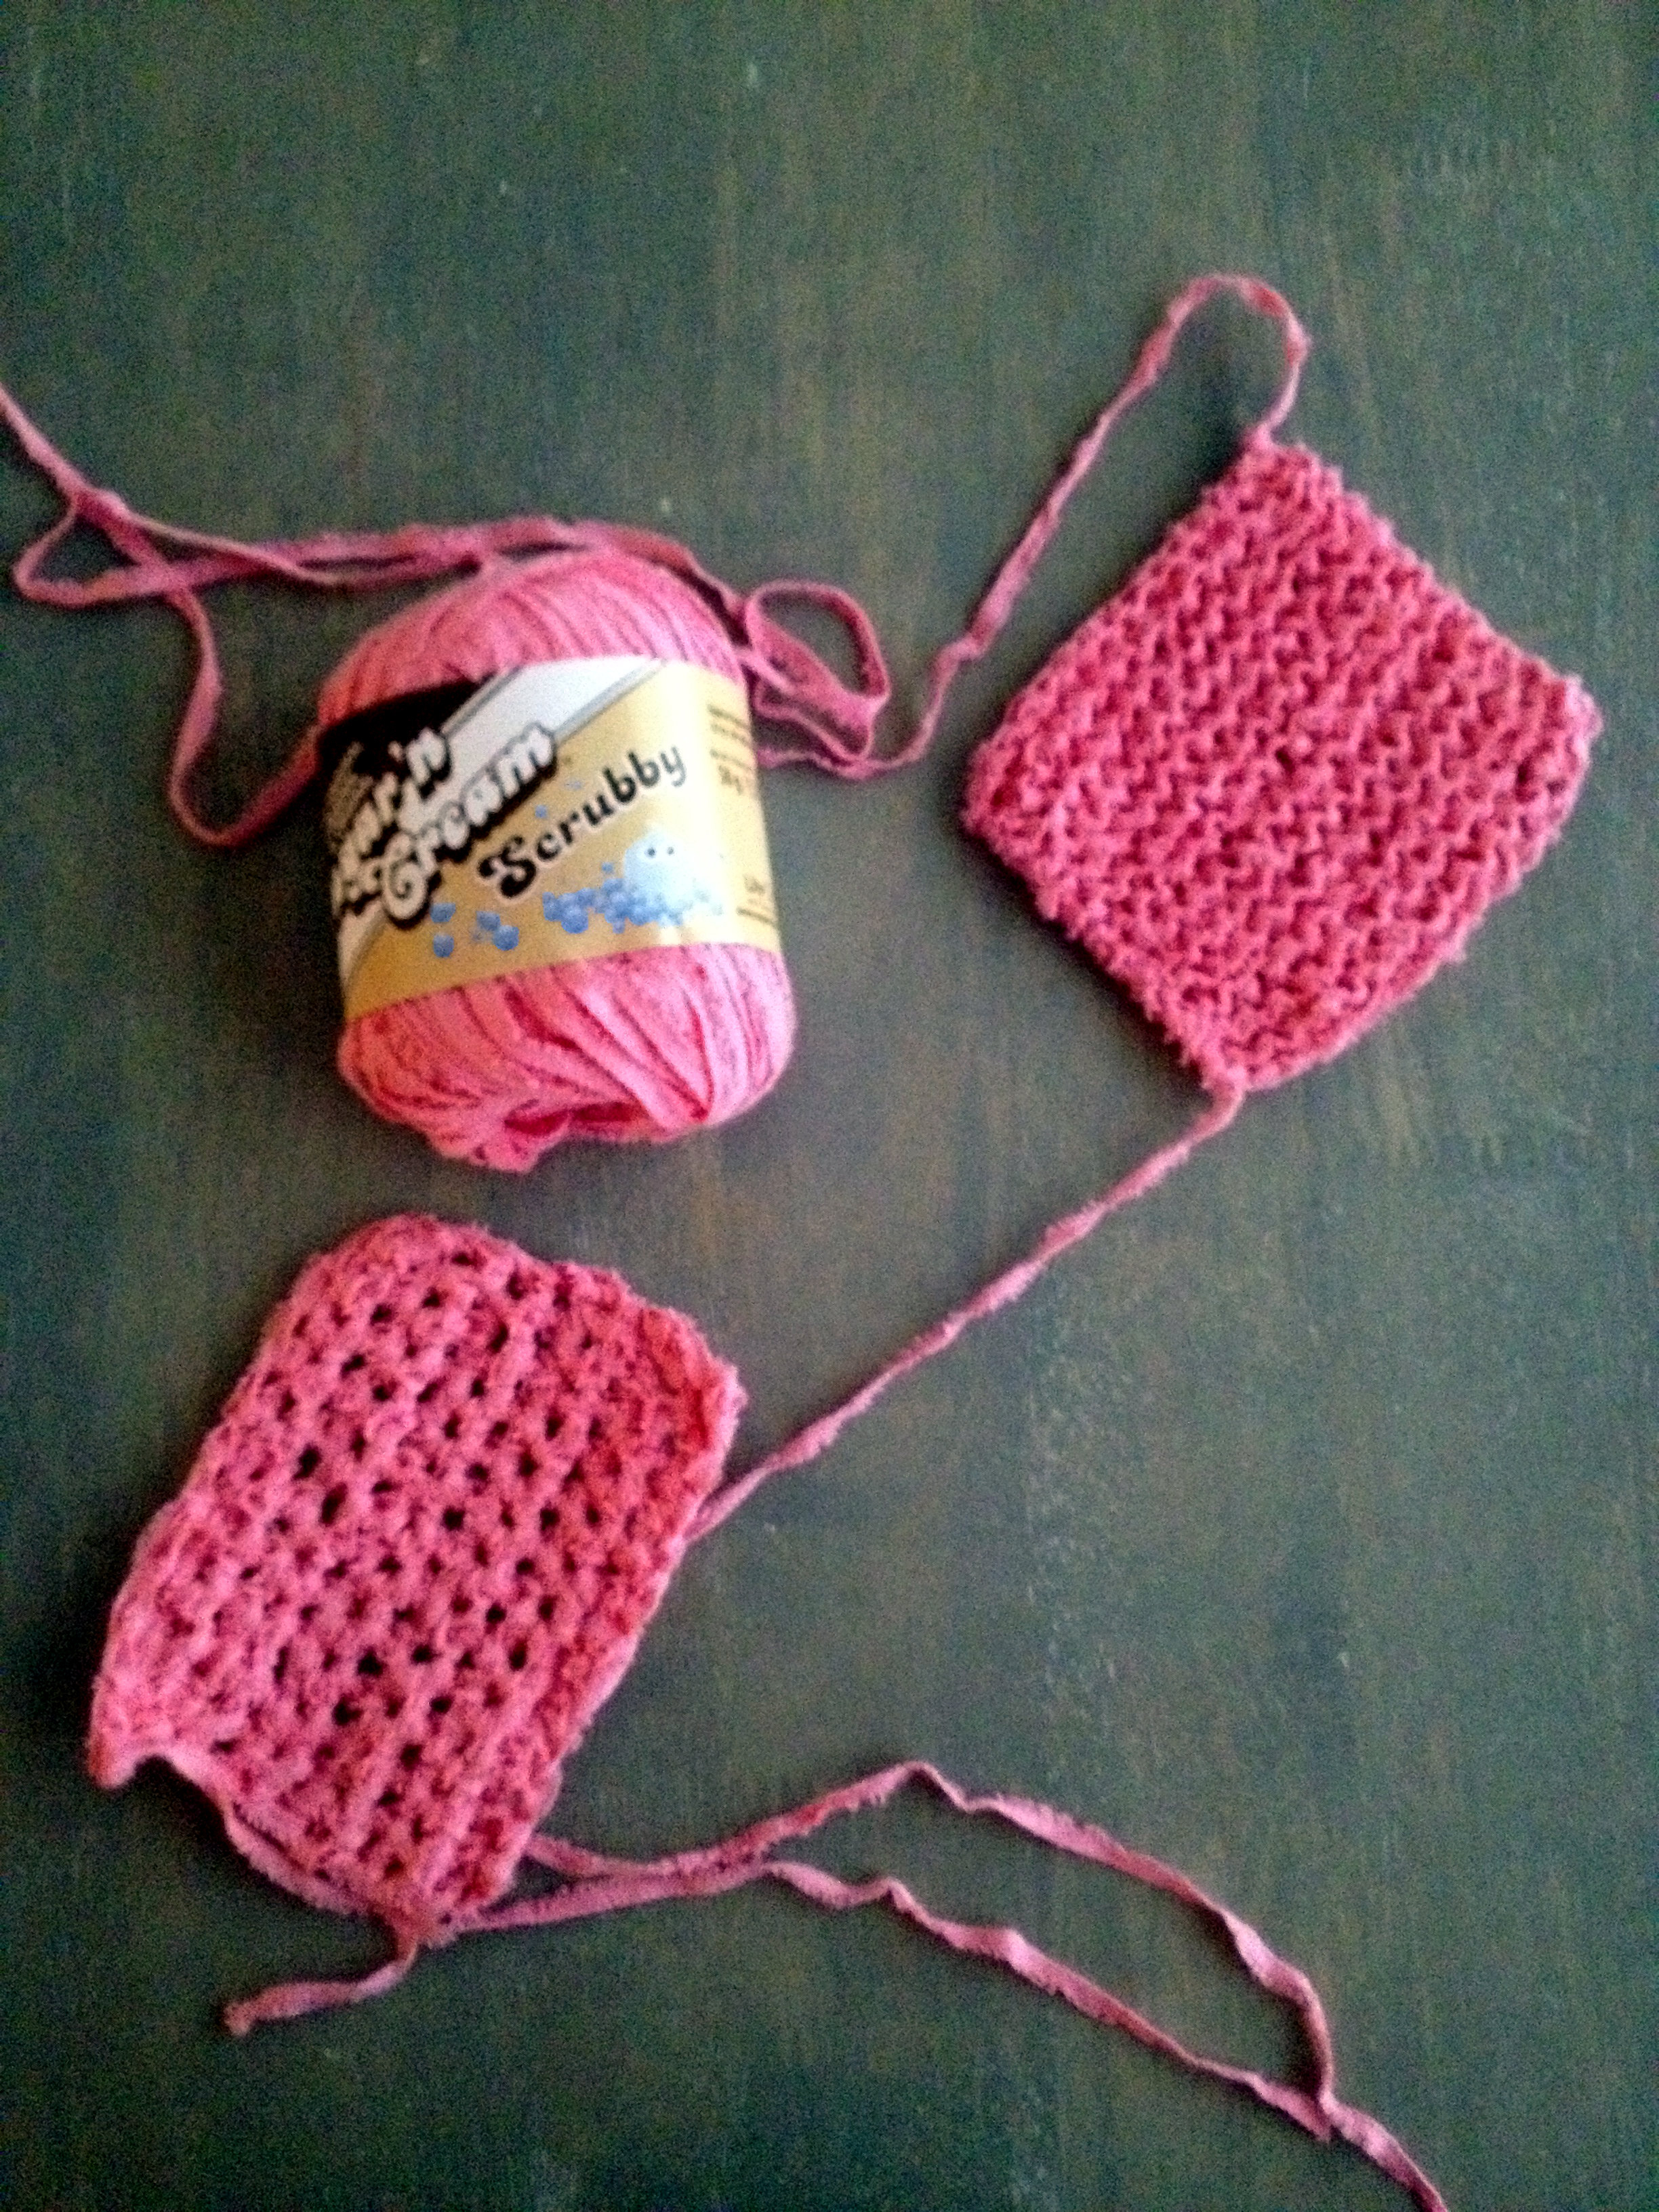 Crochet Spiral Scrubbie Pattern Sugar N Cream Scrub For The Knit Of It